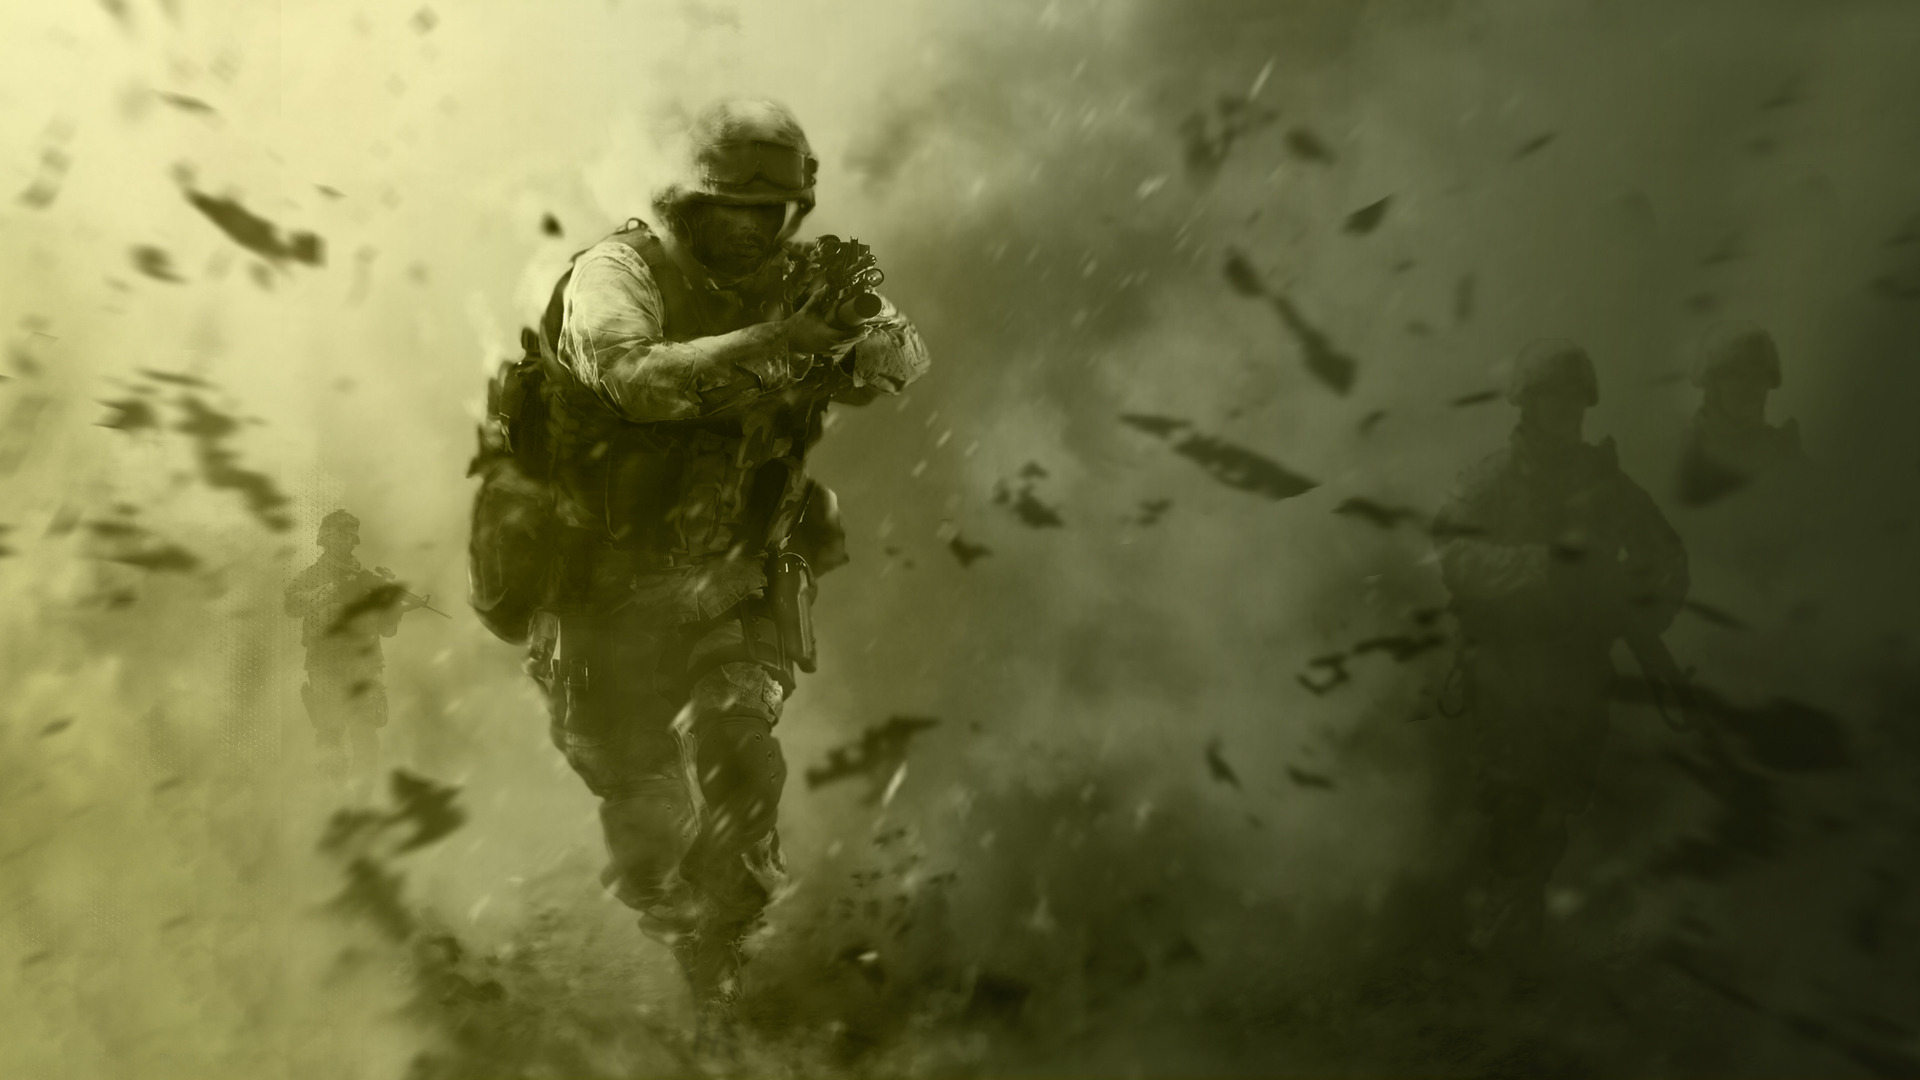 Call of Duty: Modern Warfare 2 Announces Beta PC Requirements - Gameranx